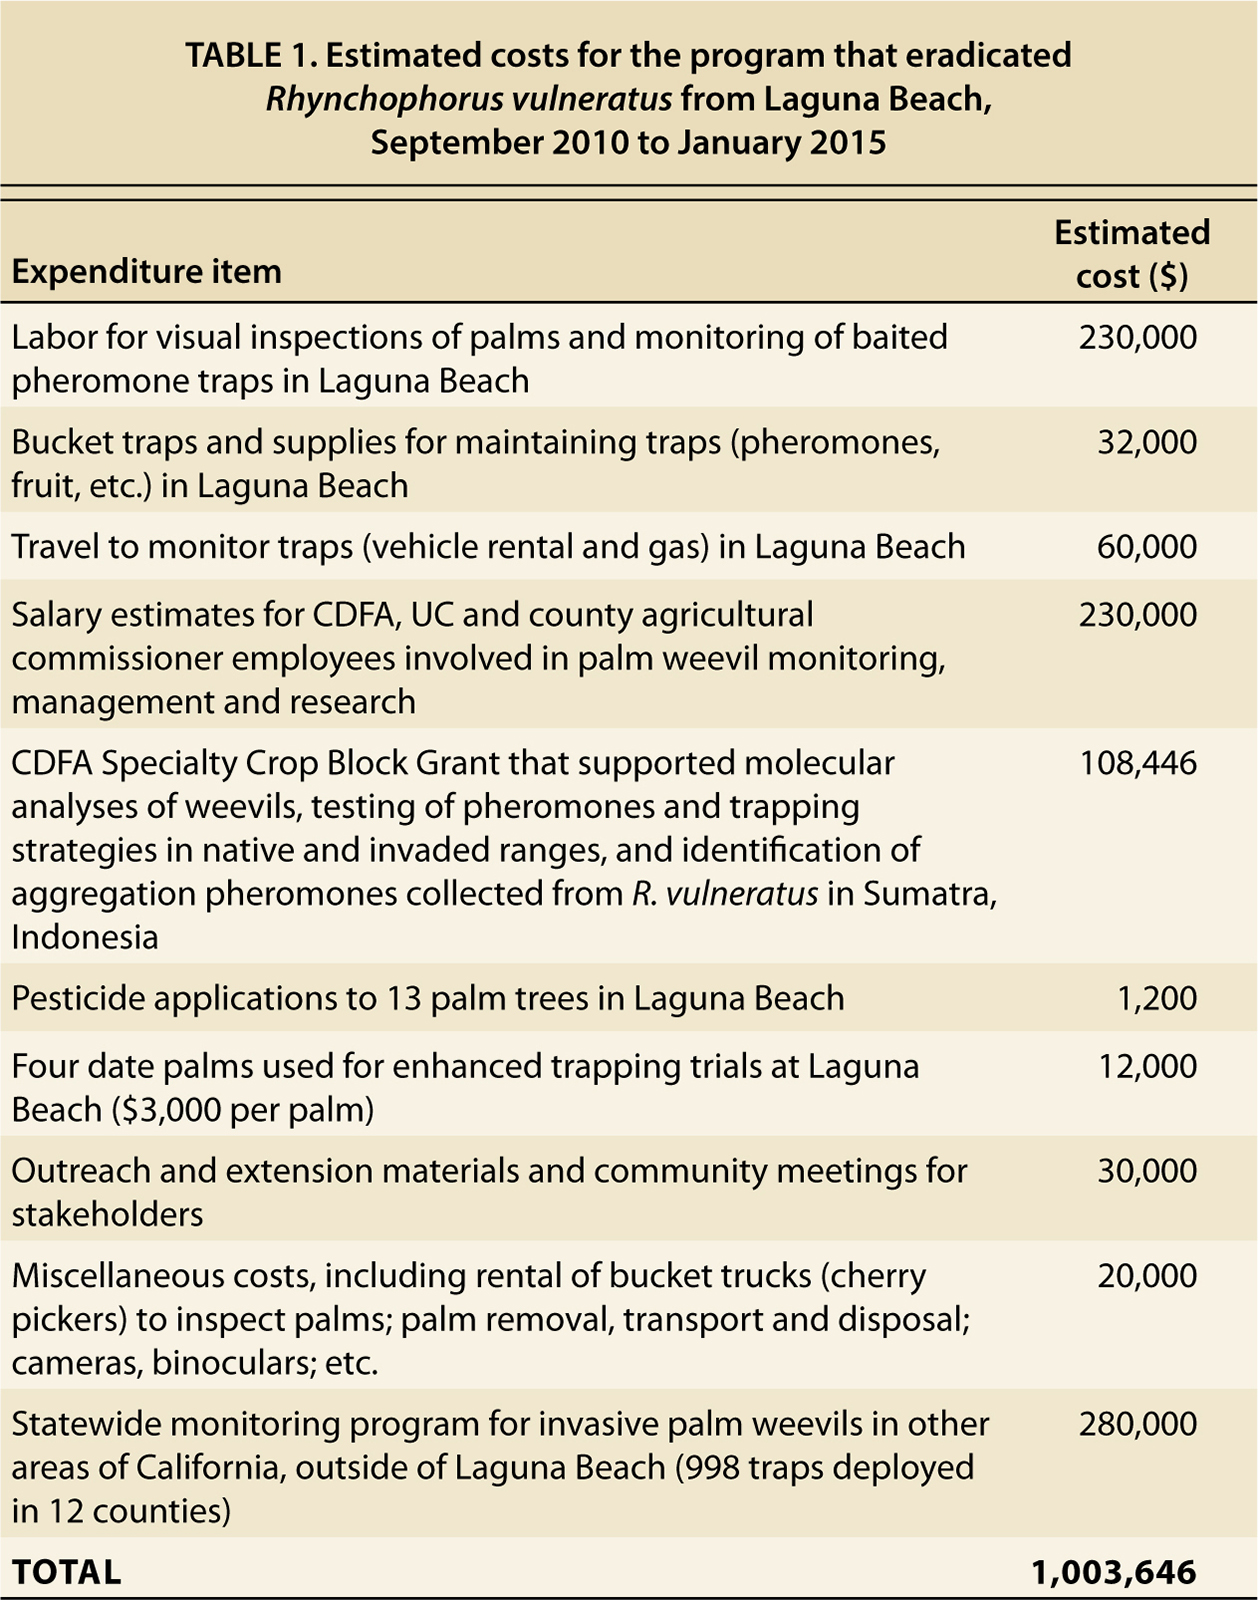 Estimated costs for the program that eradicated Rhynchophorus vulneratus from Laguna Beach, September 2010 to January 2015